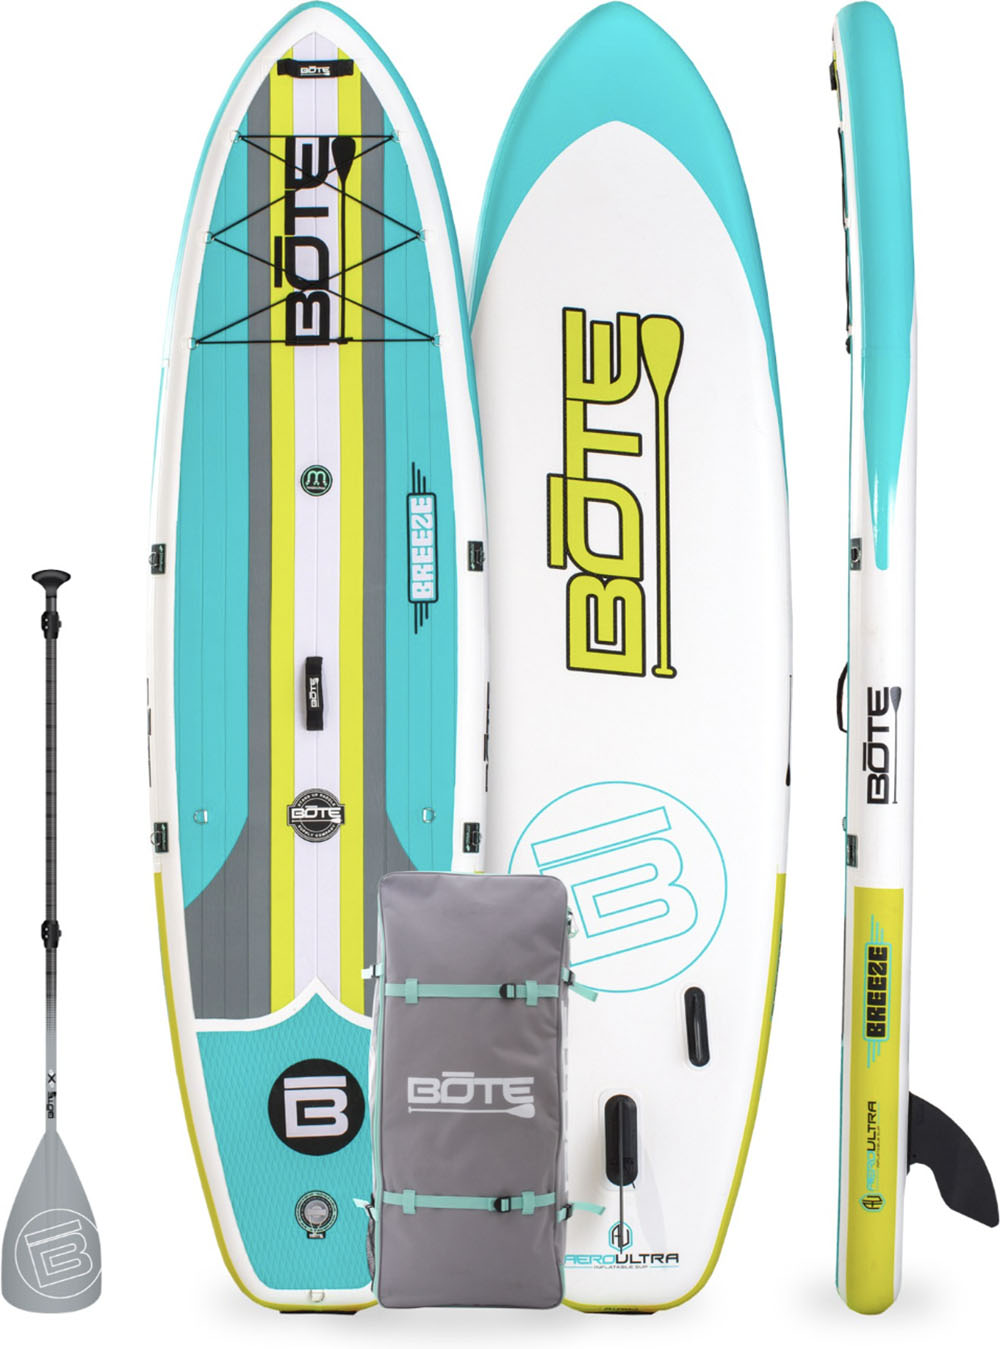 Bote Breeze Aero stand up paddle board